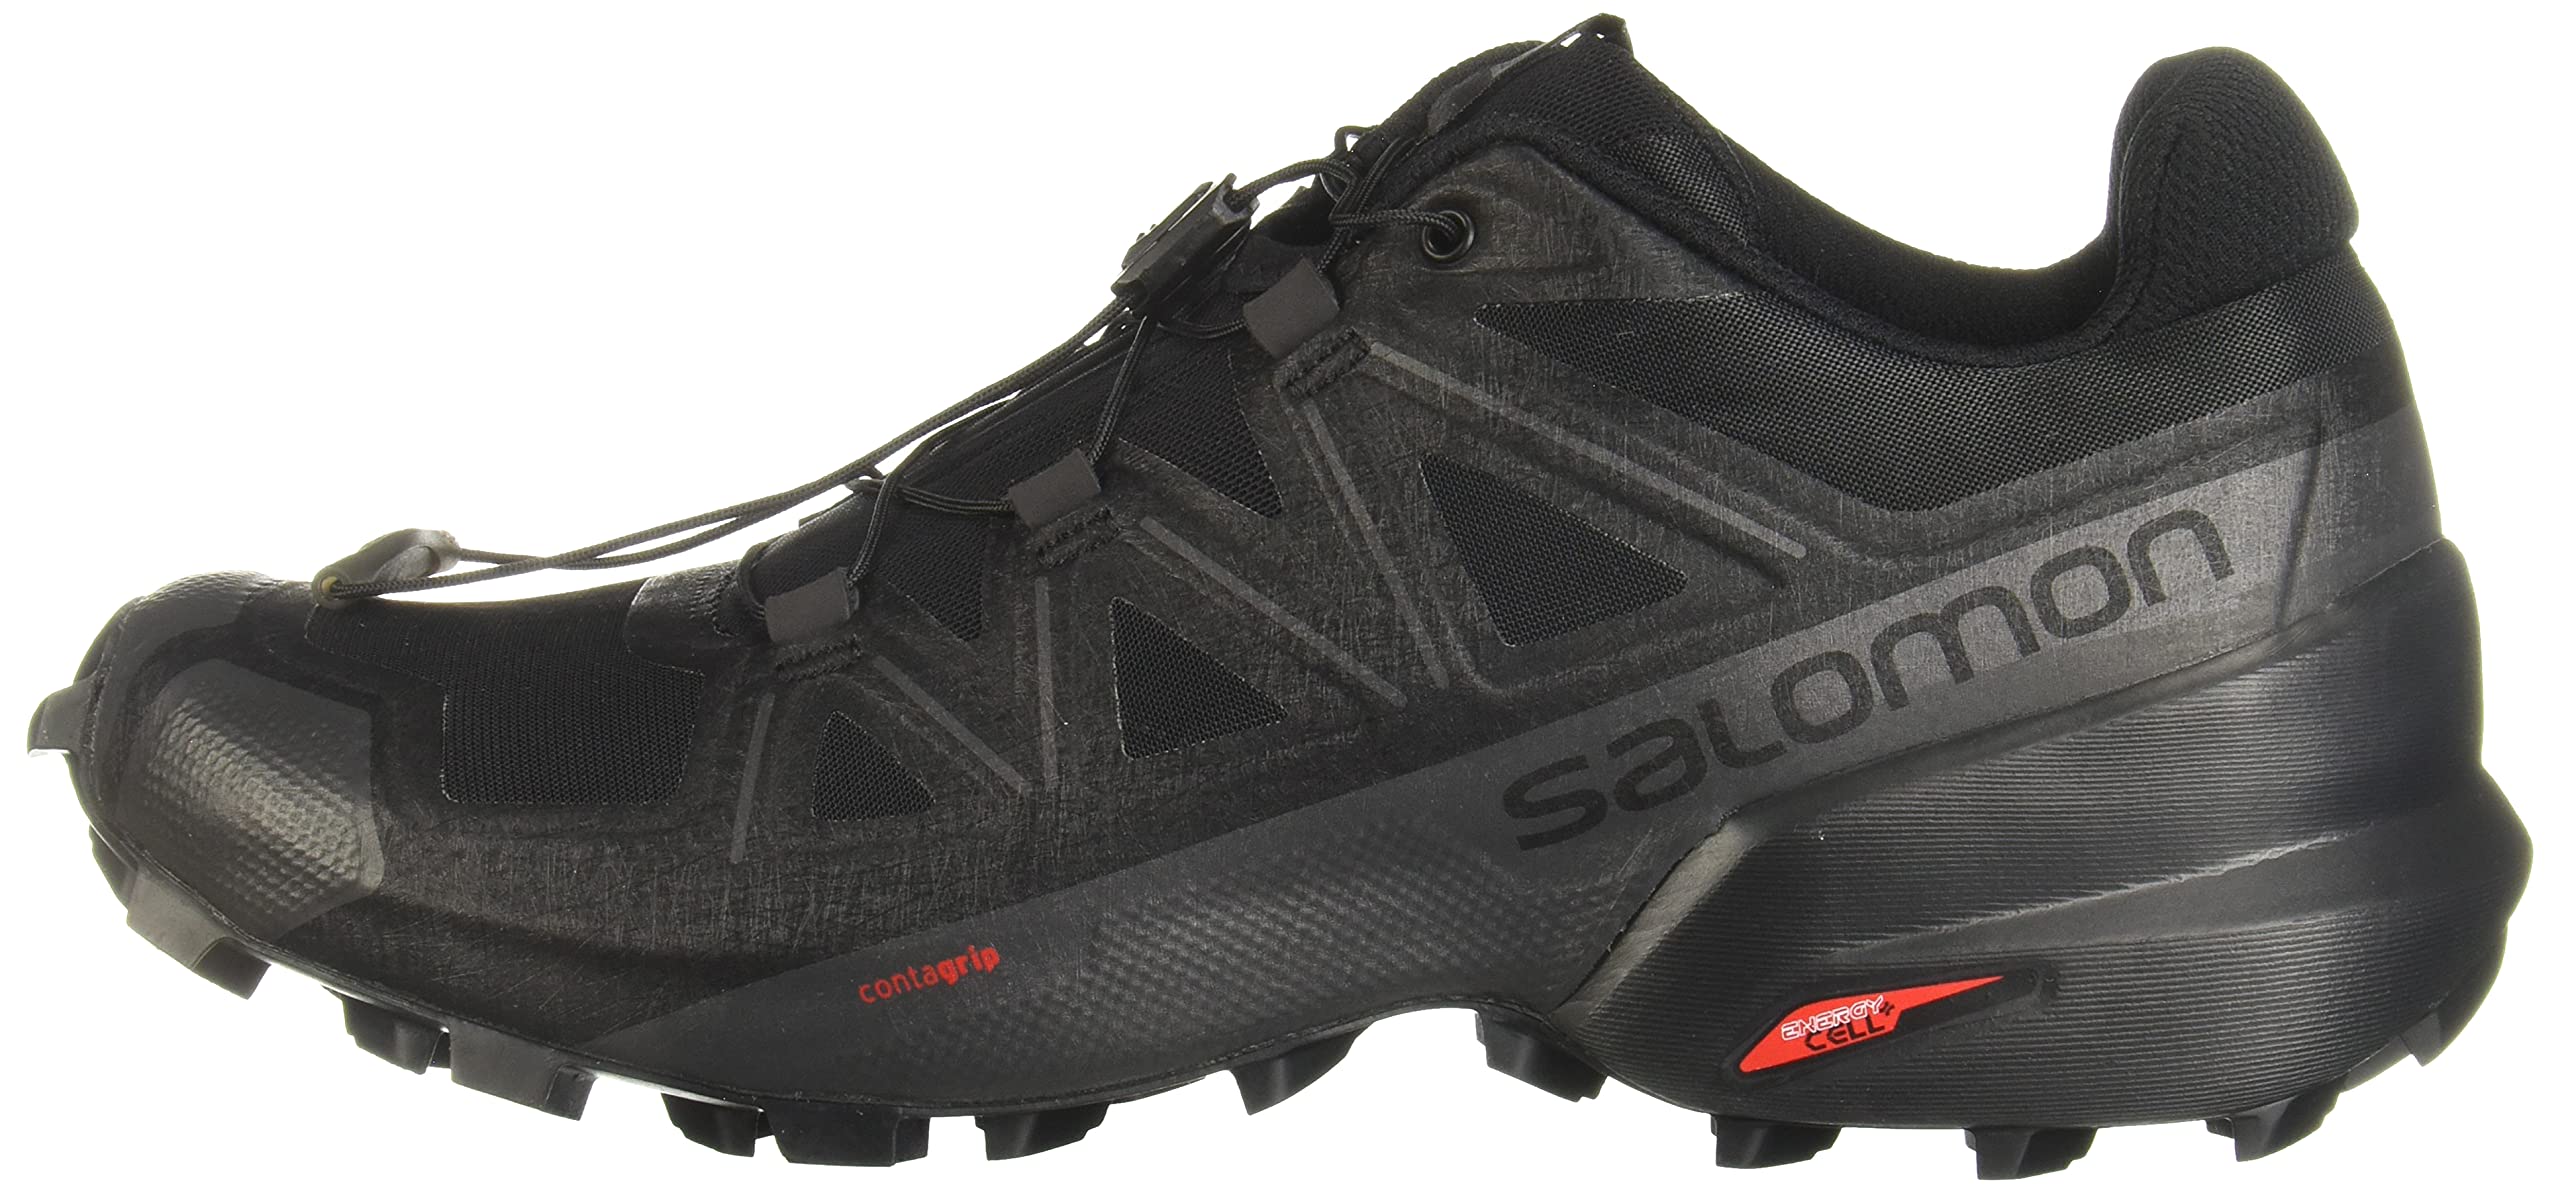 Salomon Women's Speedcross 5 Trail Running Shoes